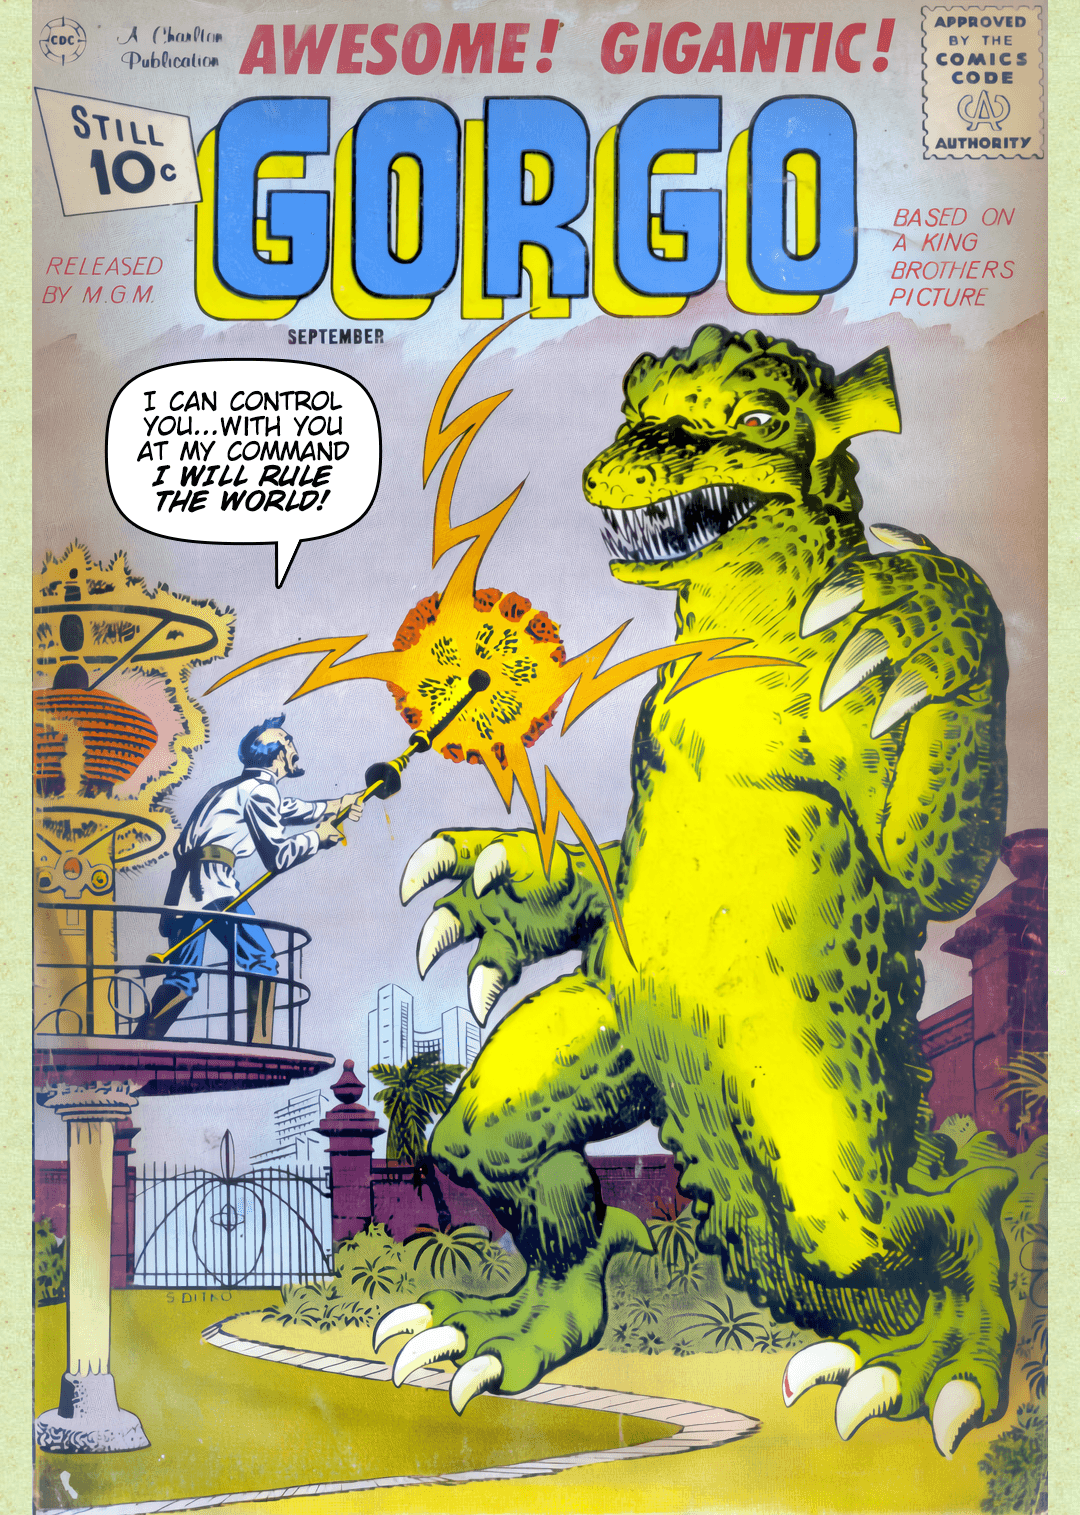 The Return of Gorgo #1 image number 0